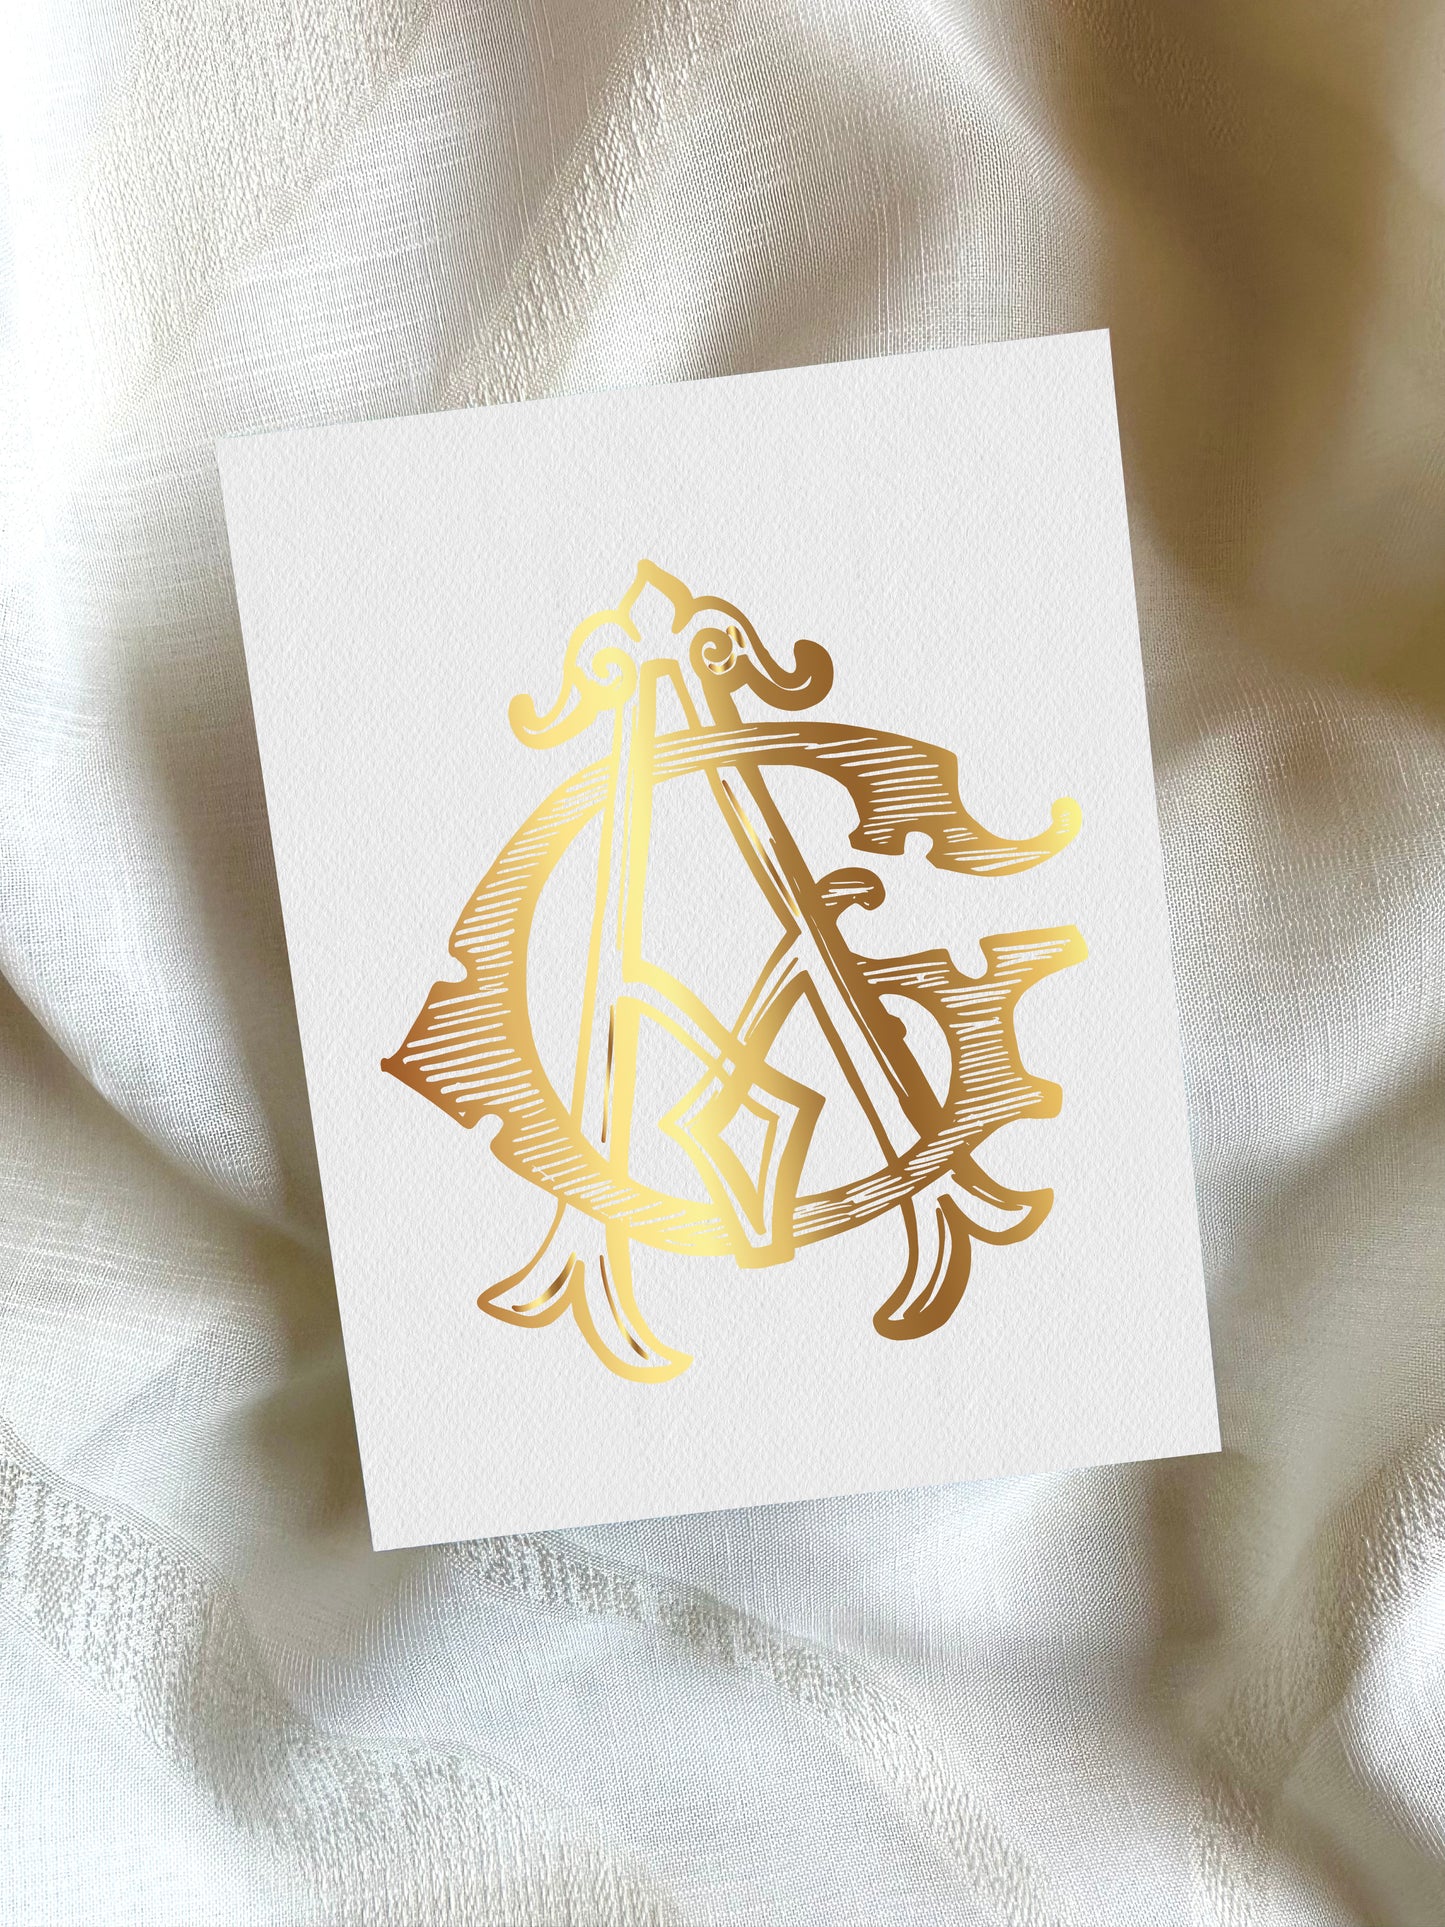 2 Letter Monogram with Letters AG | Digital Download - Wedding Monogram SVG, Personal Logo, Wedding Logo for Wedding Invitations The Wedding Crest Lab